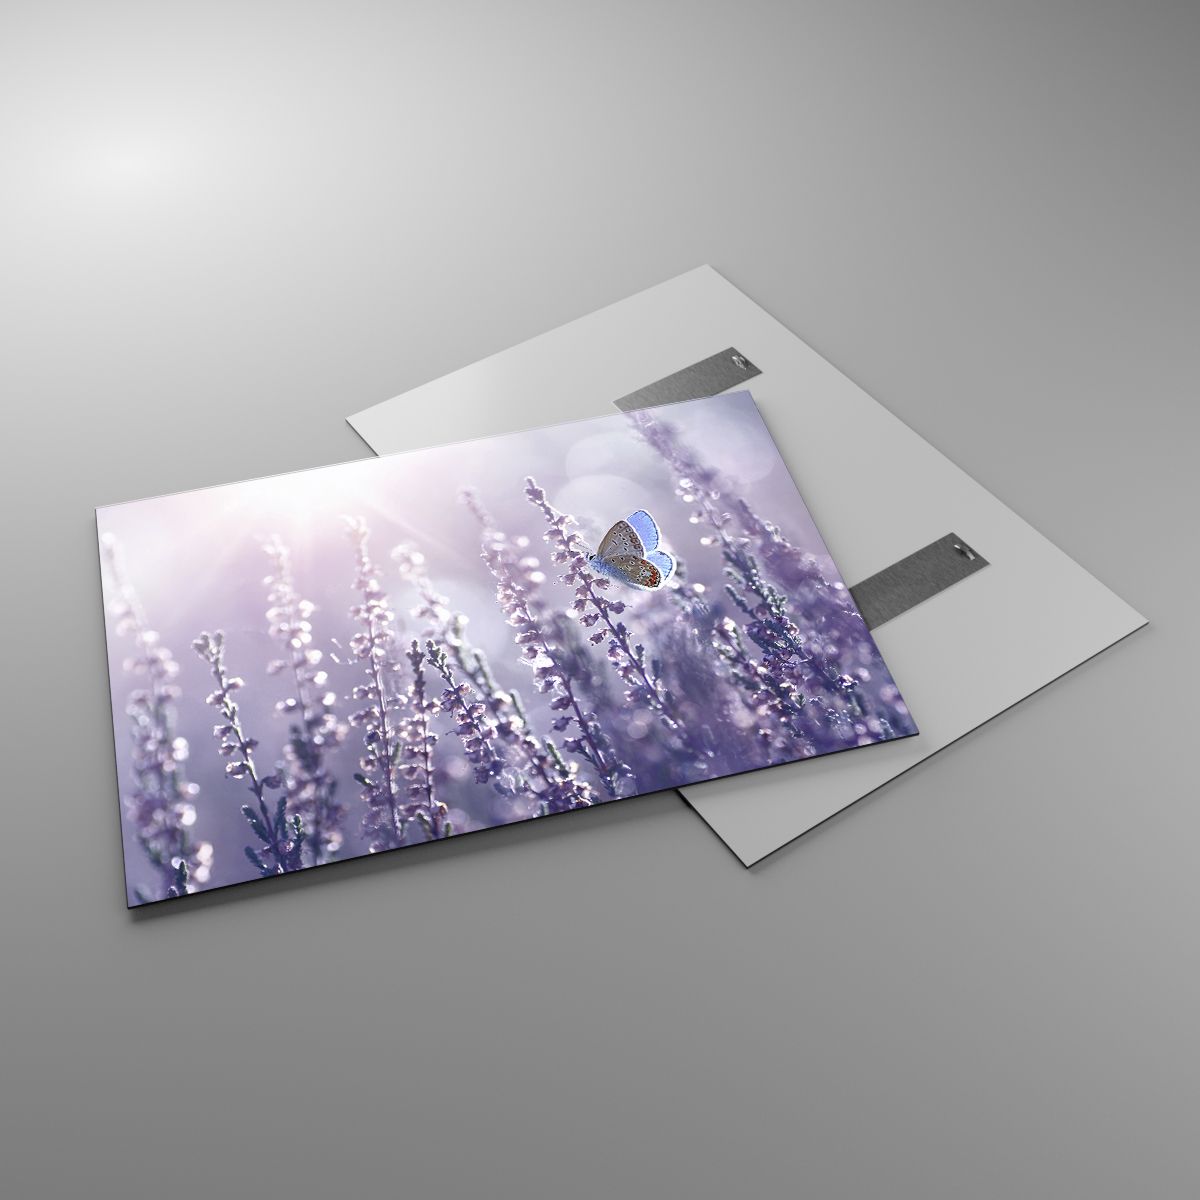 Glasbild Schmetterling, Glasbild Wiese, Glasbild Blume, Glasbild Natur, Glasbild Violette Farben